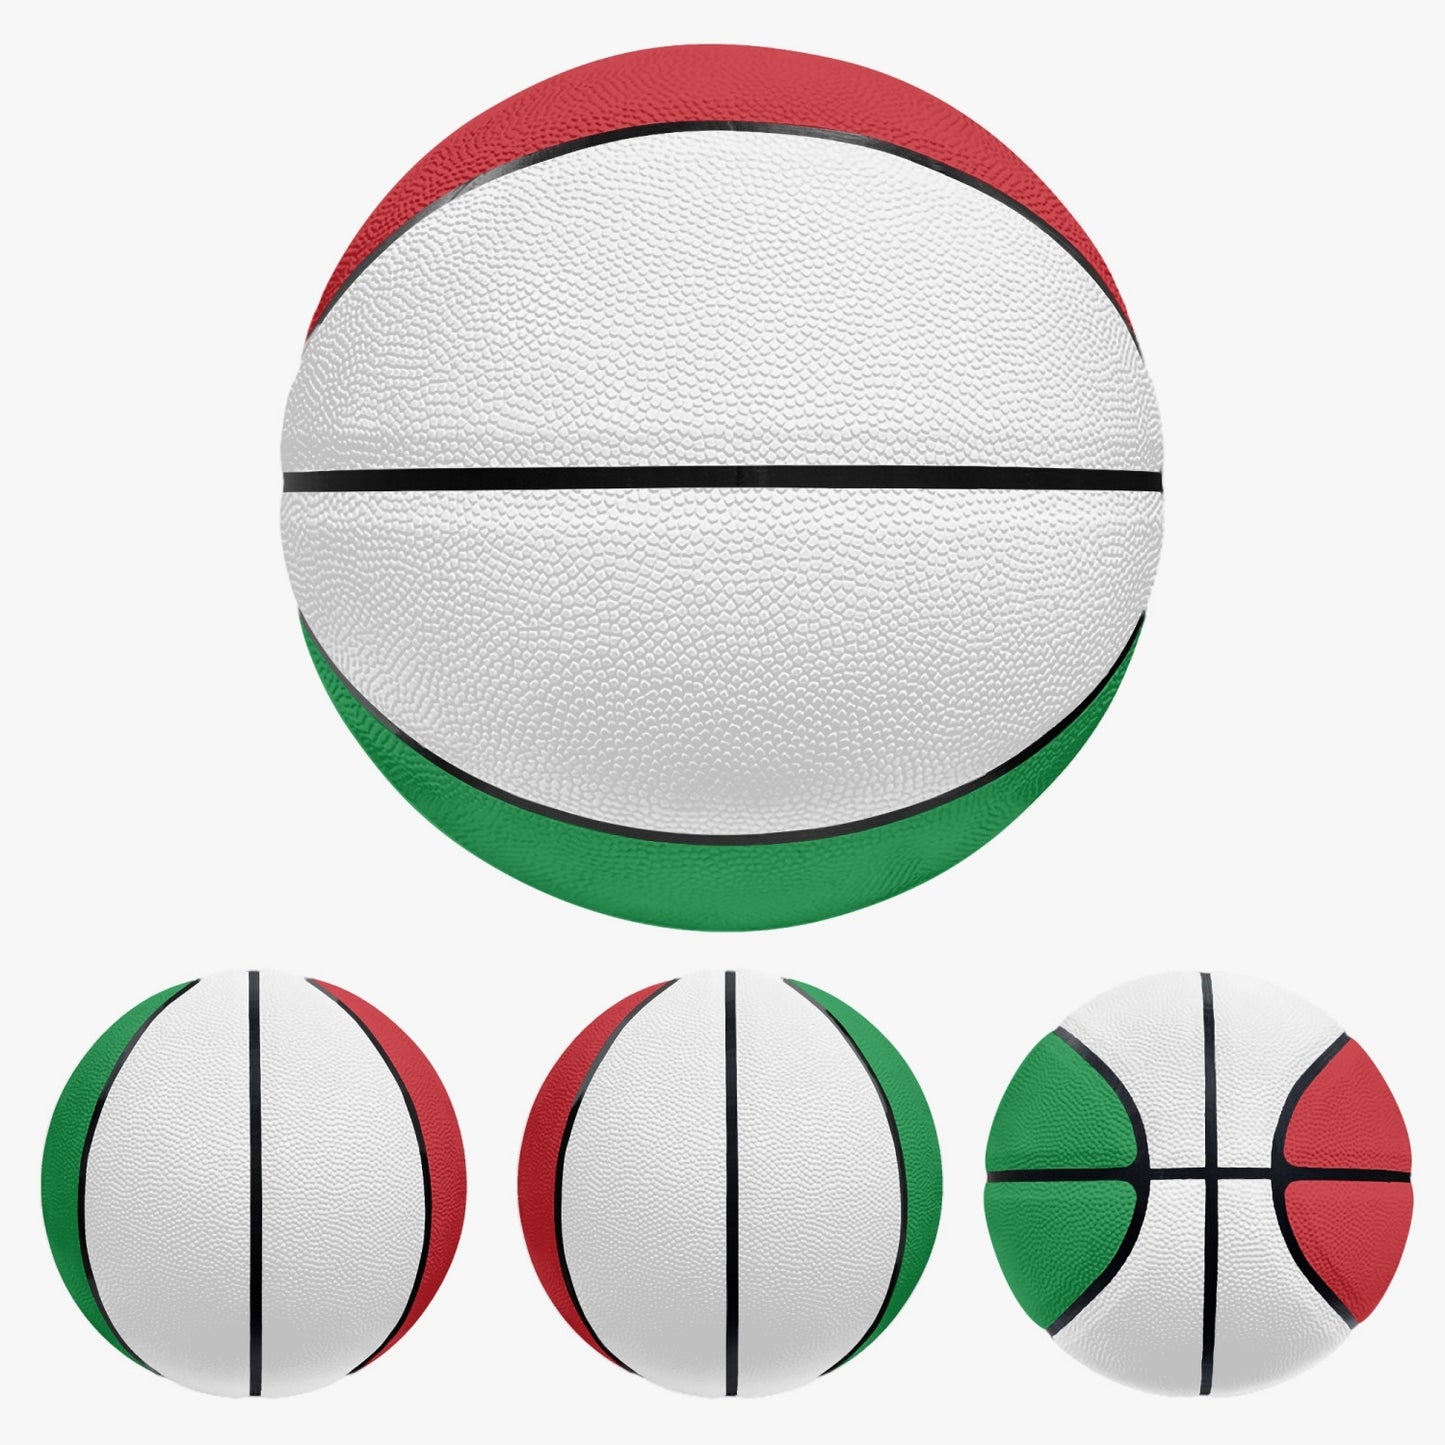 Italy Basketball